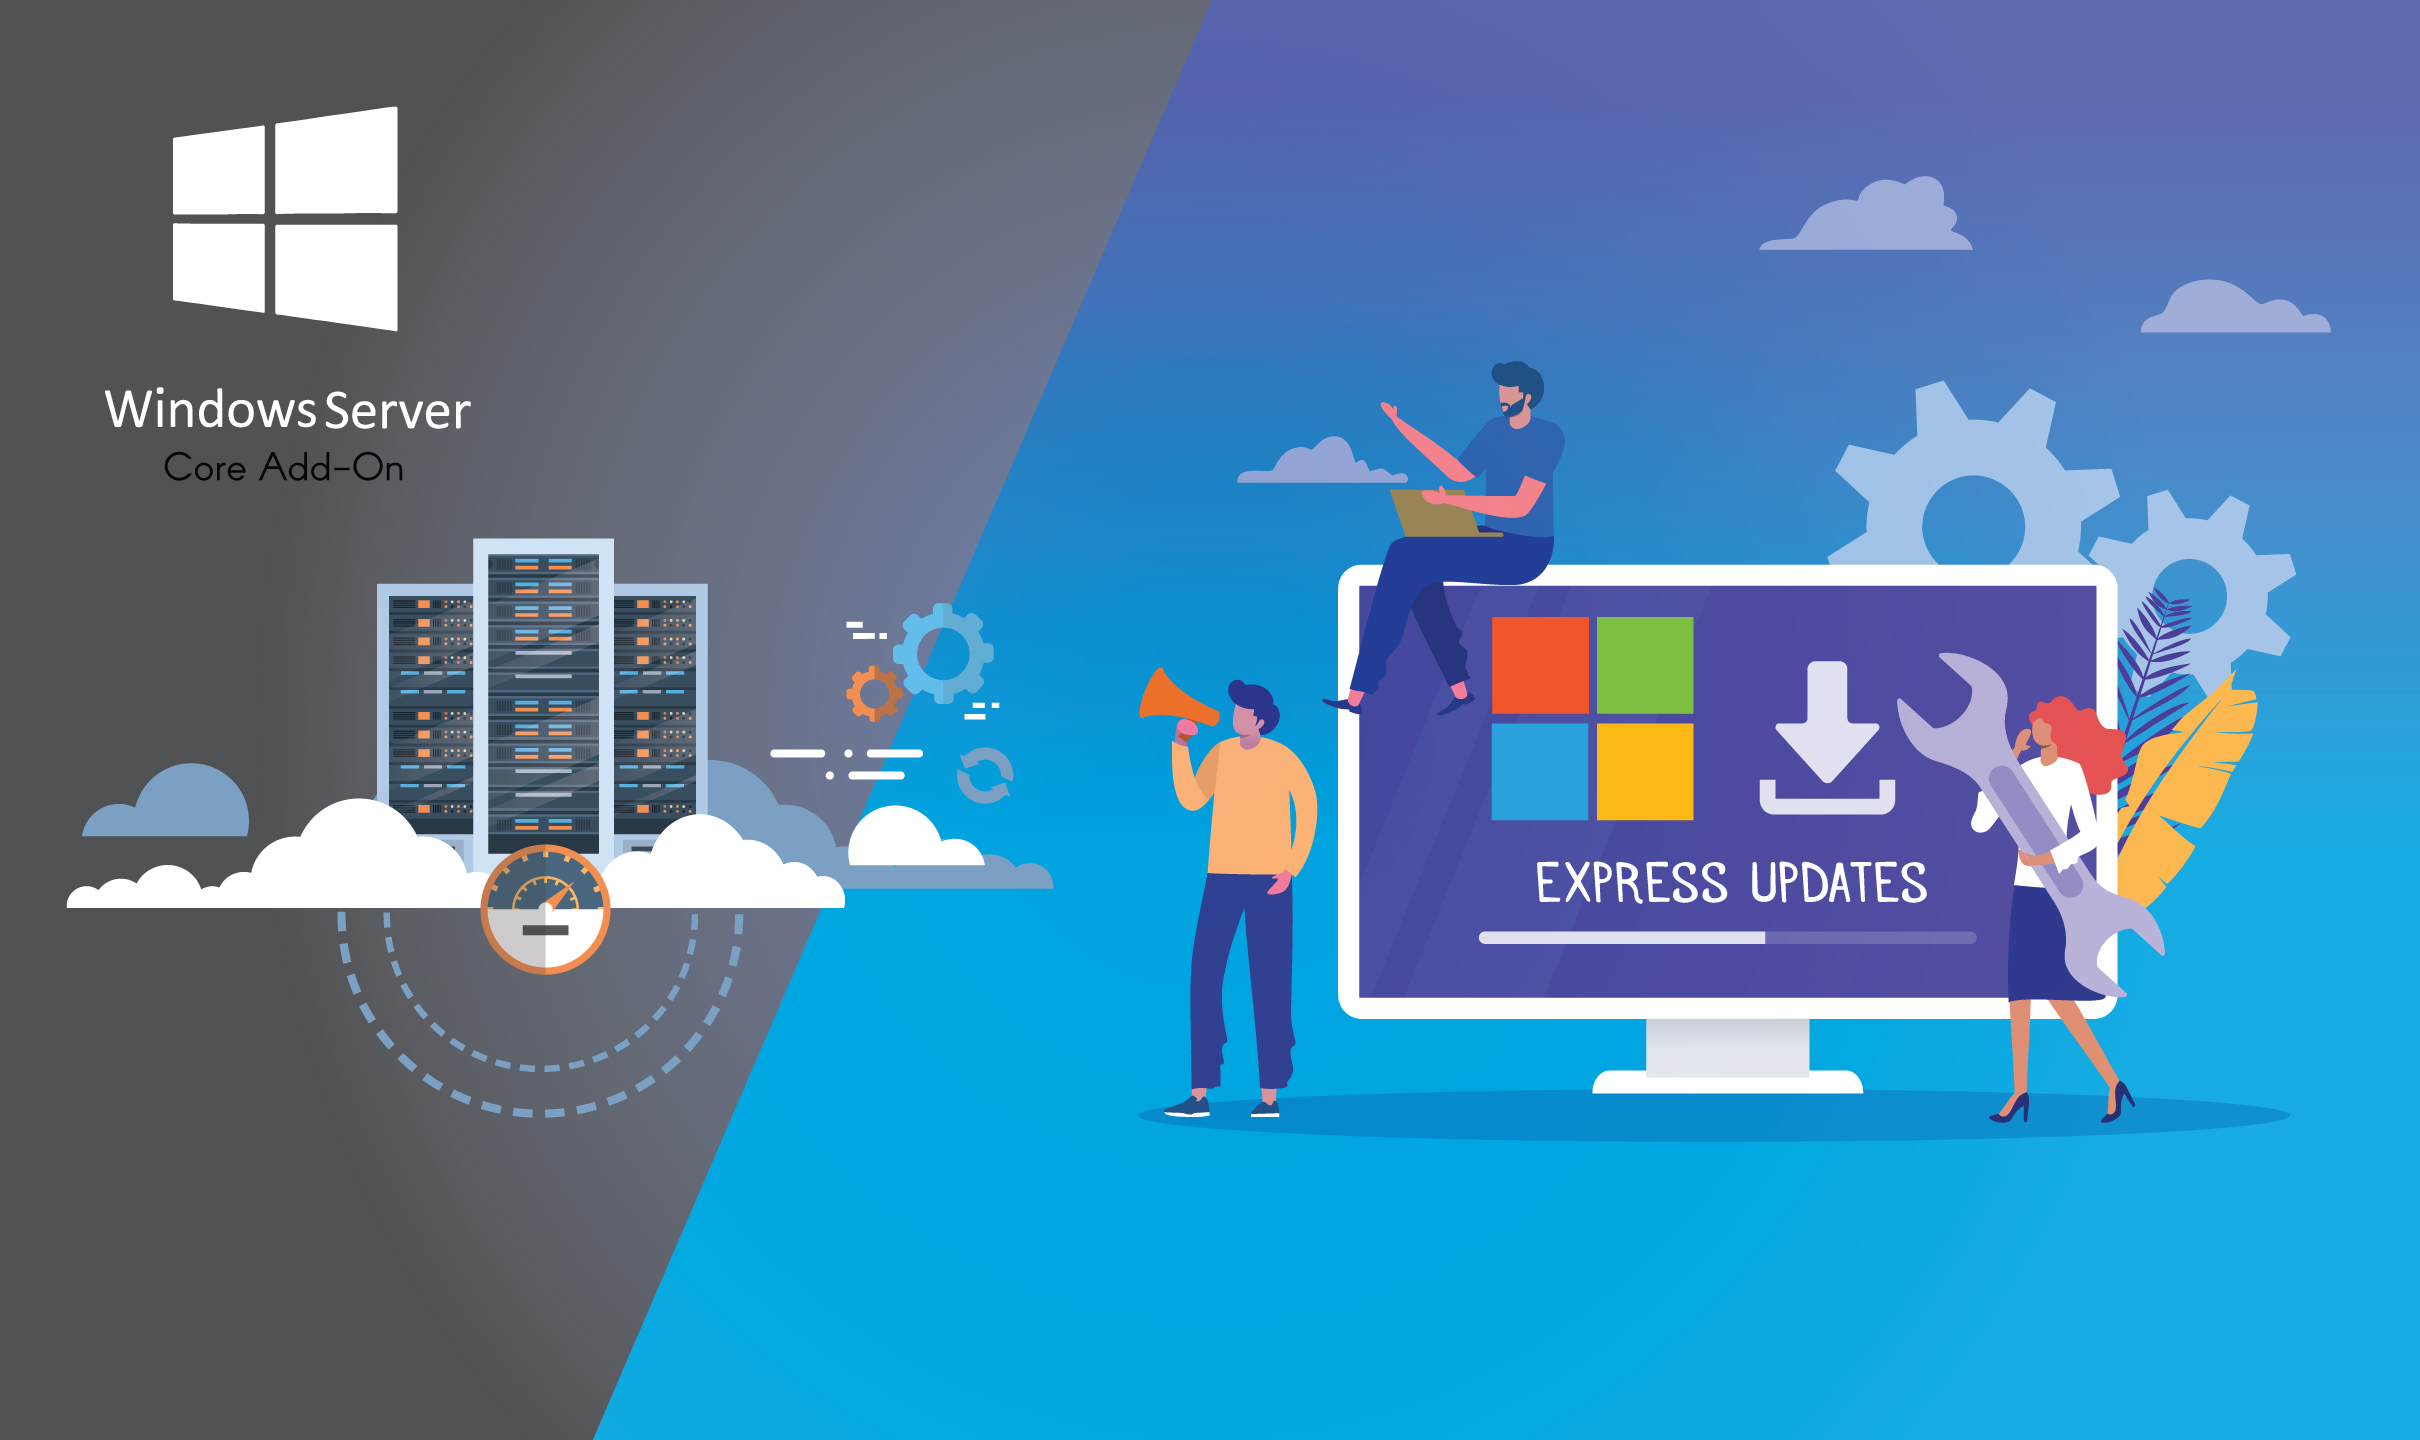 Install Windows Server 2019 Datacenter Core Add-On
